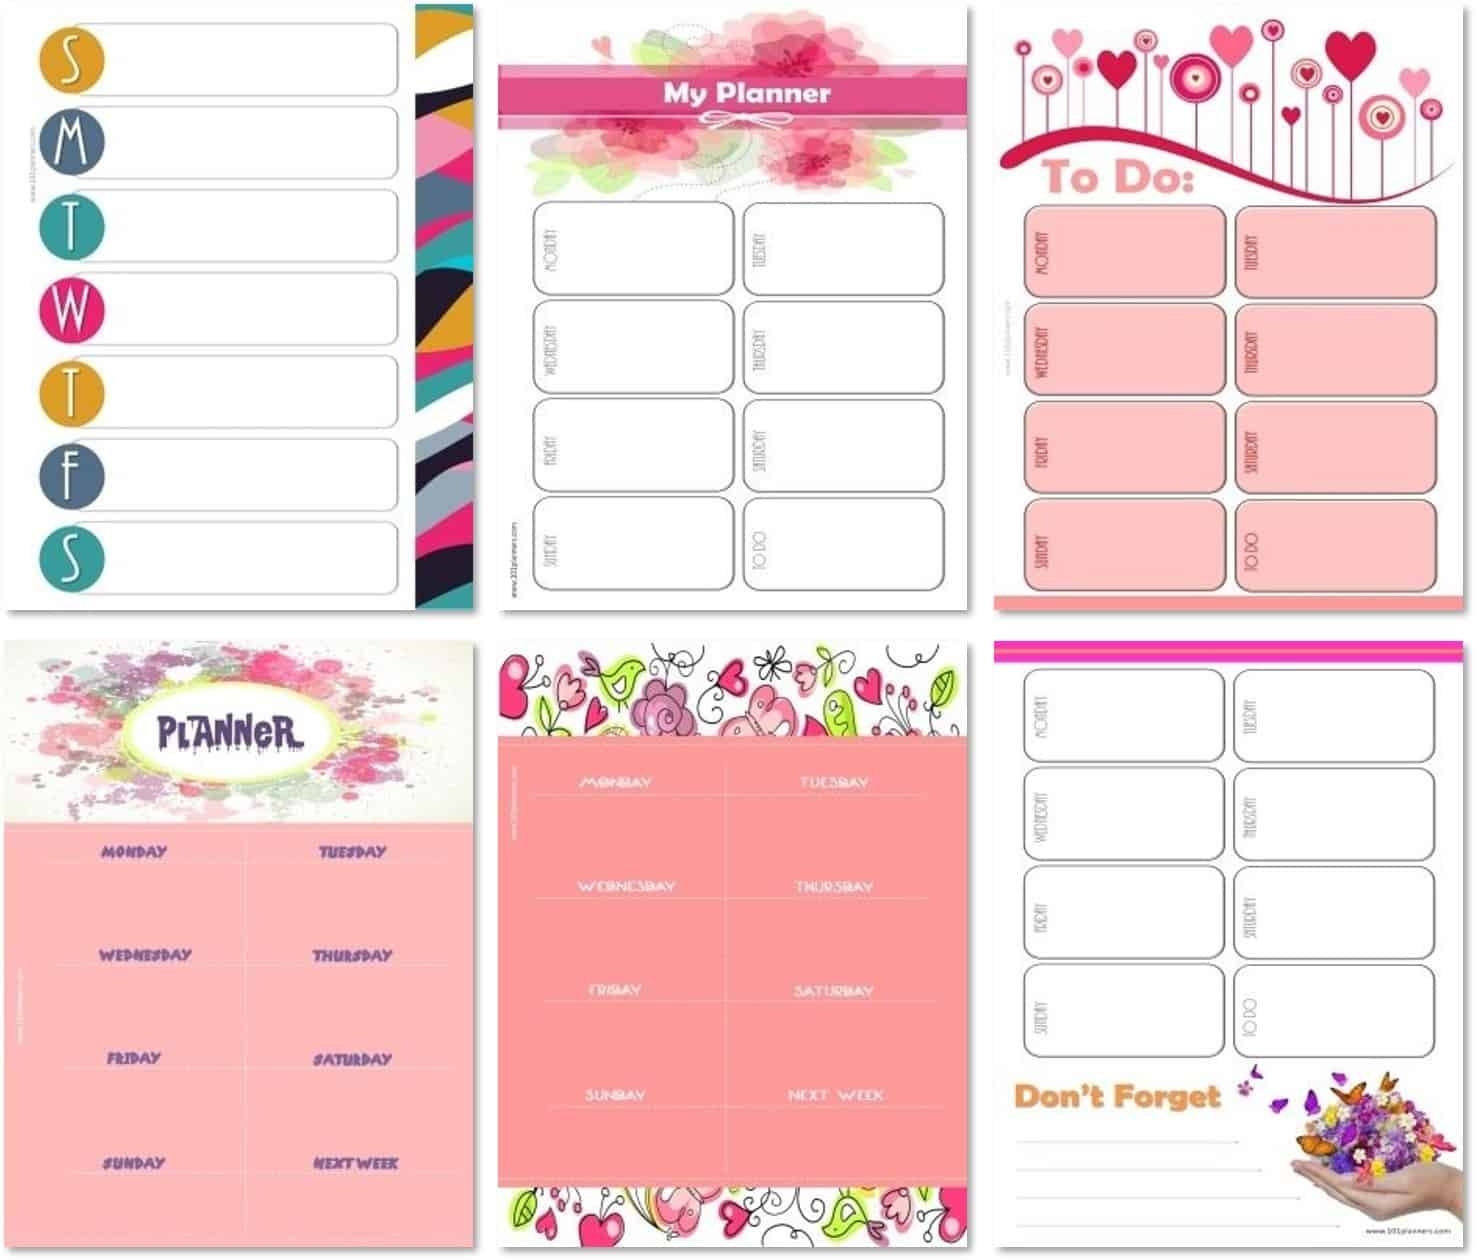 Weekly Calendar Maker | Create Free Custom Calendars